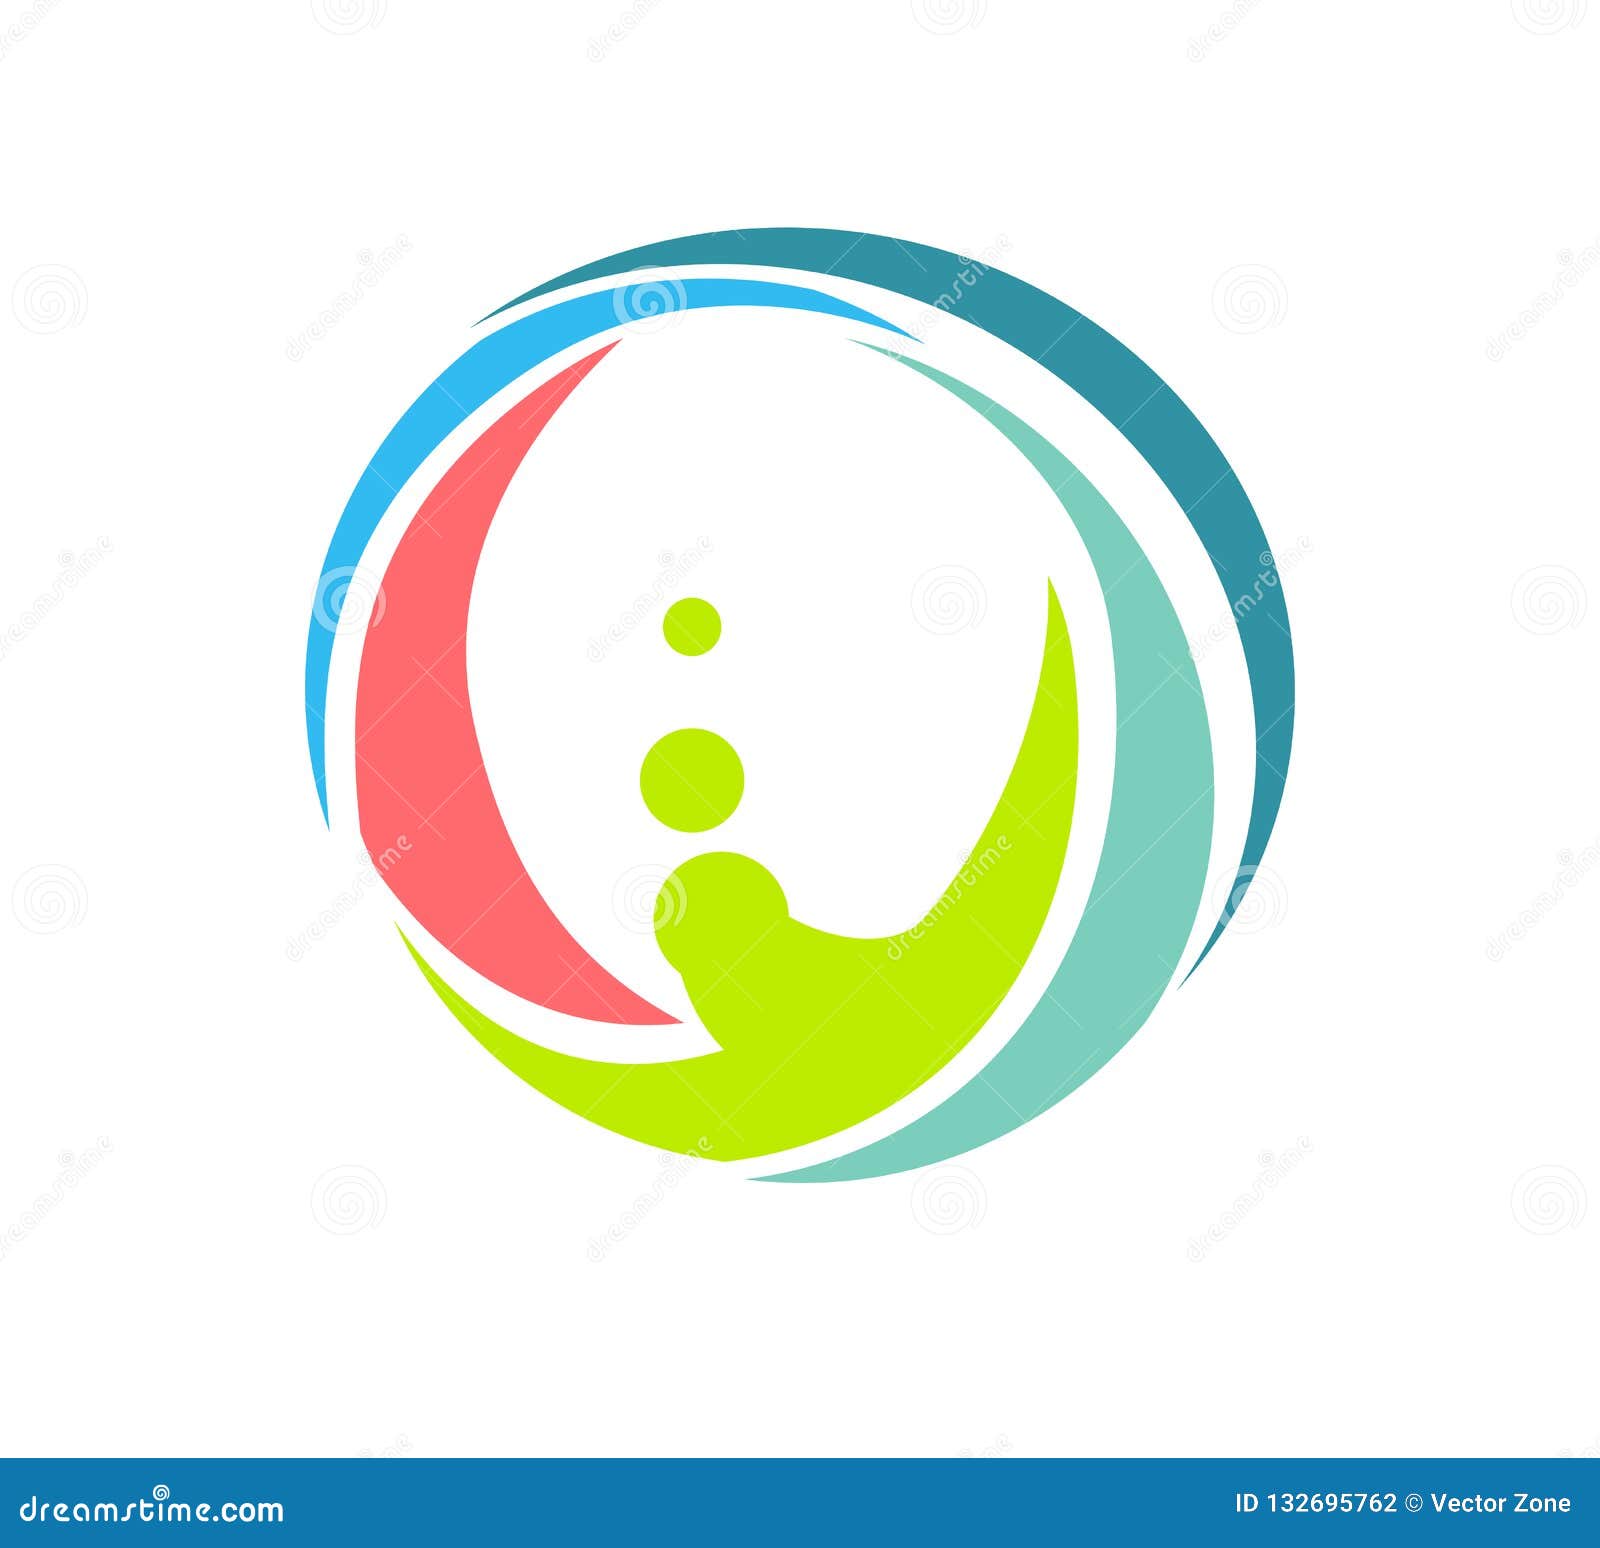 Abstract Colorful Circle Logo Stock Vector Illustration Of Circle